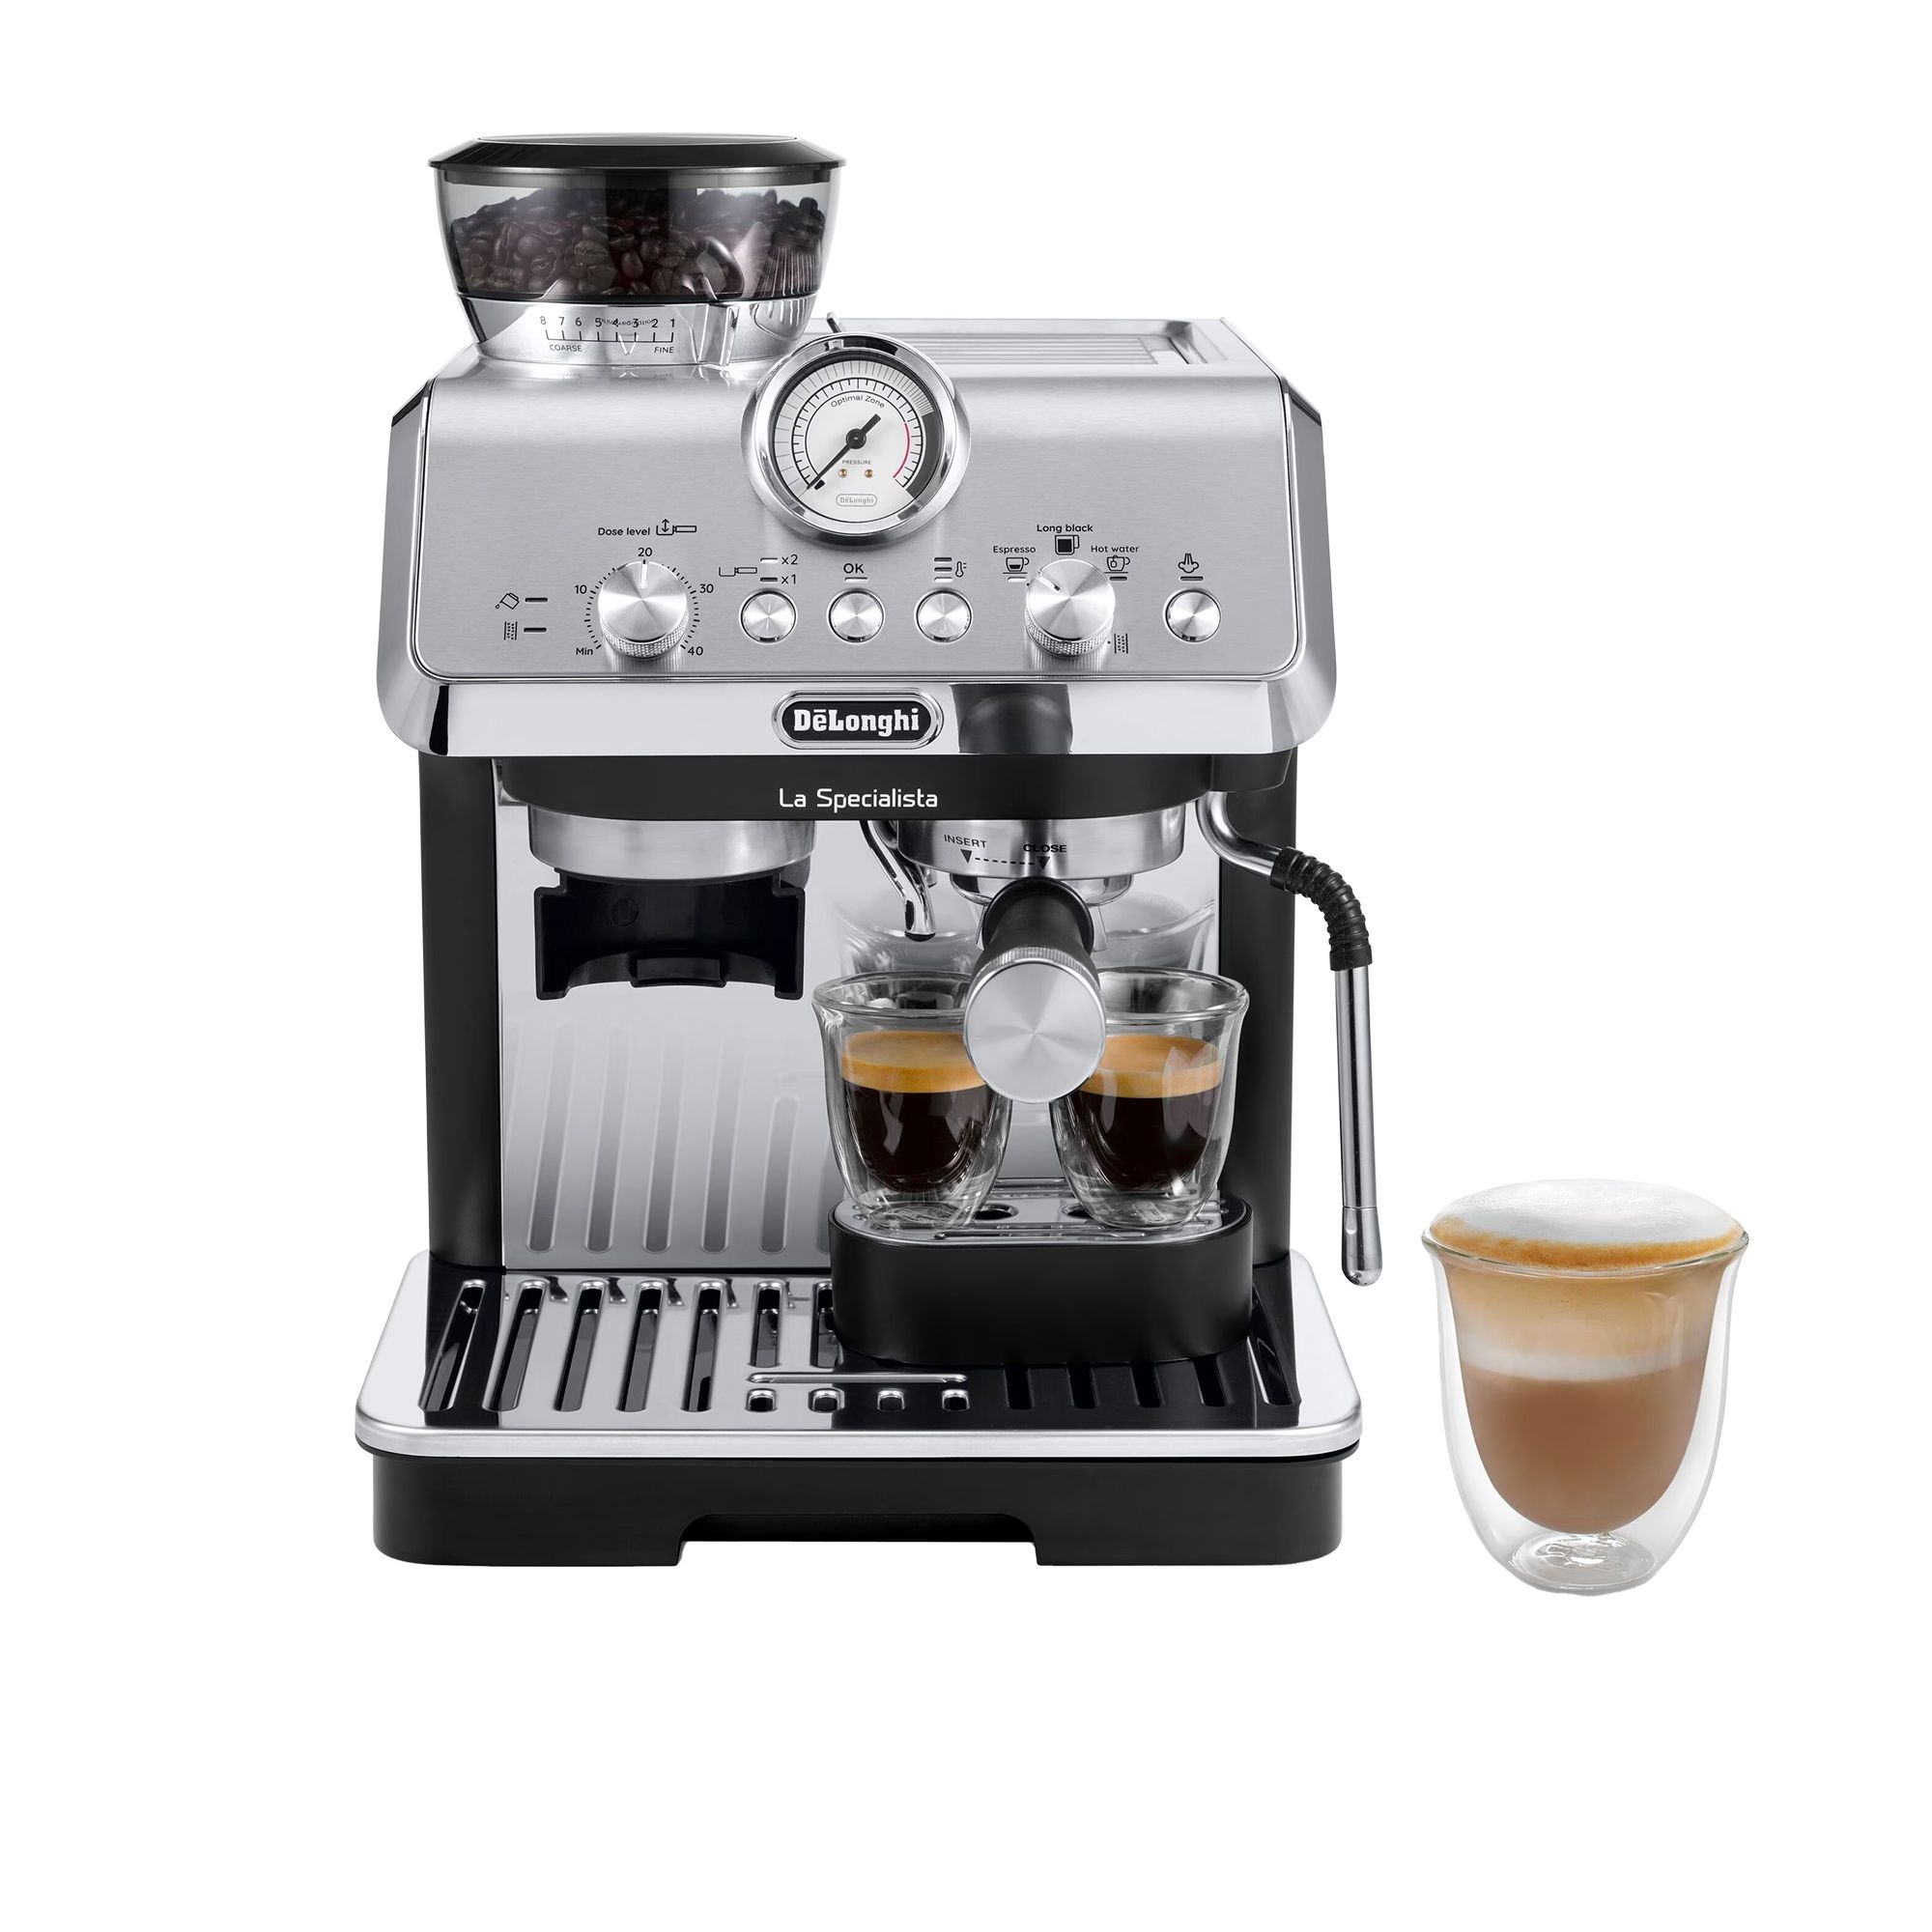 DeLonghi La Specialista Arte EC9155MB Espresso Coffee Machine Black Image 1